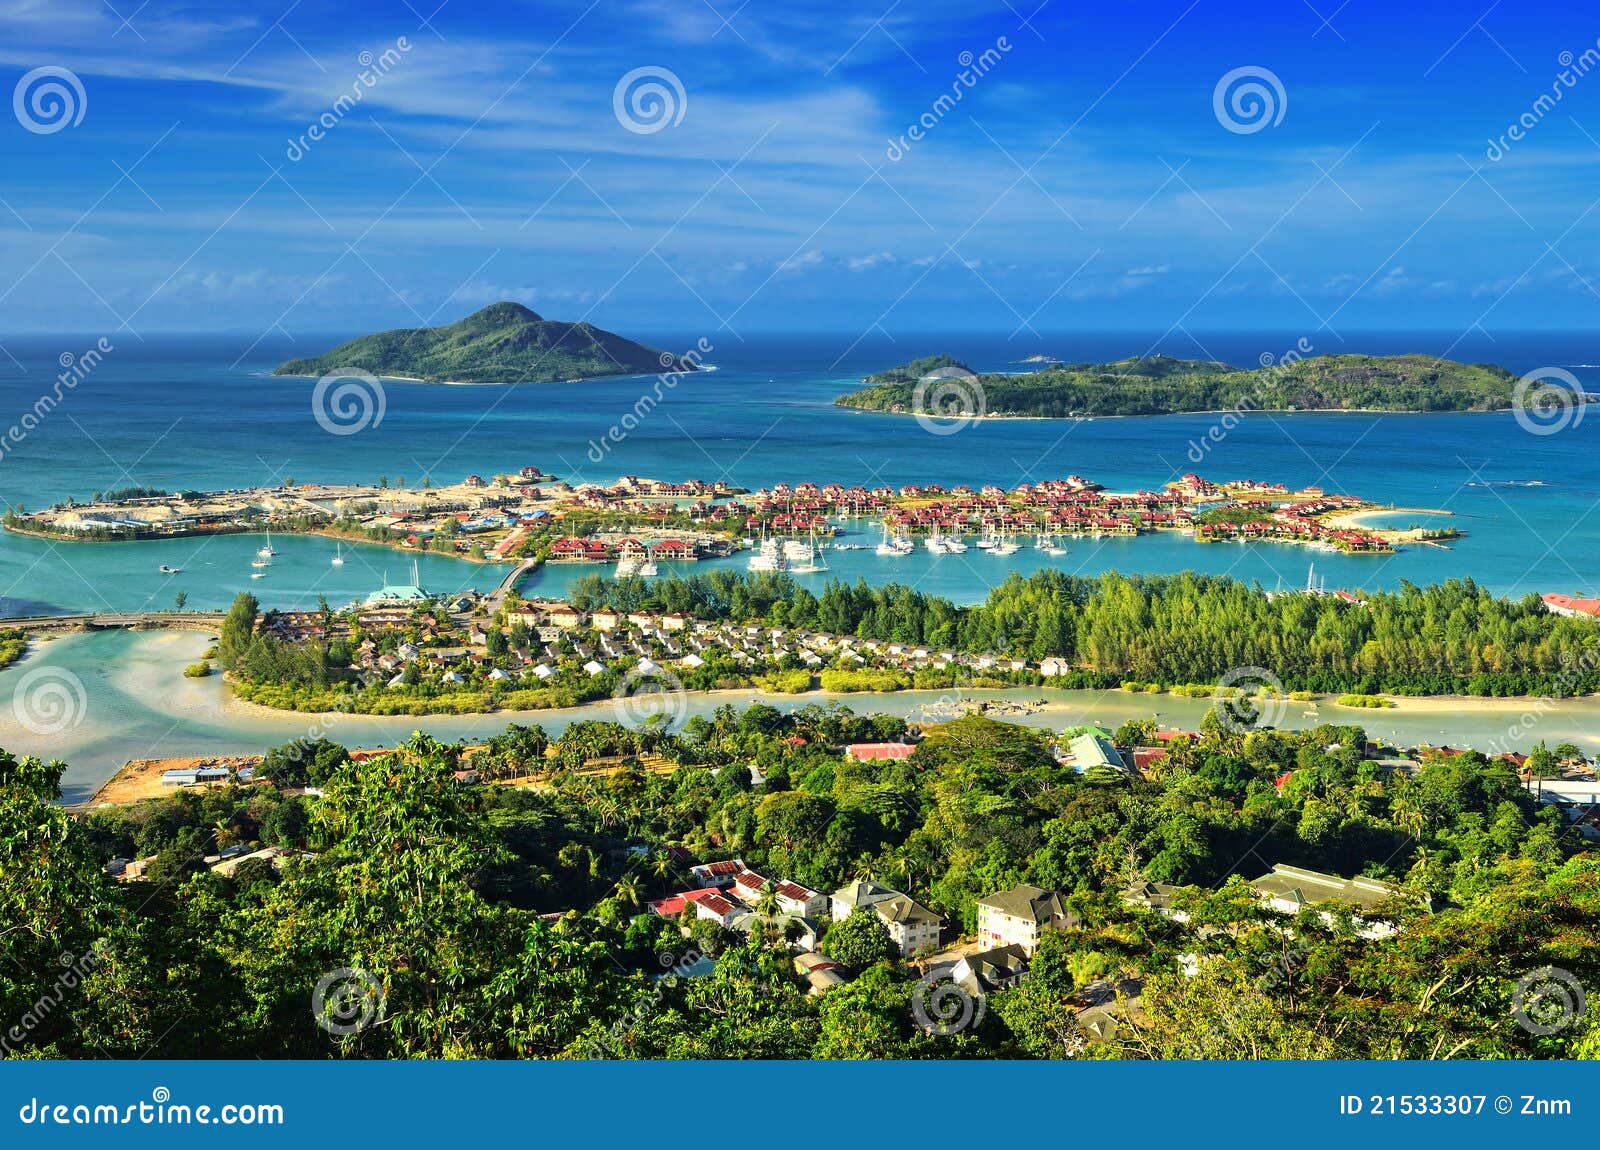 seychelles islands